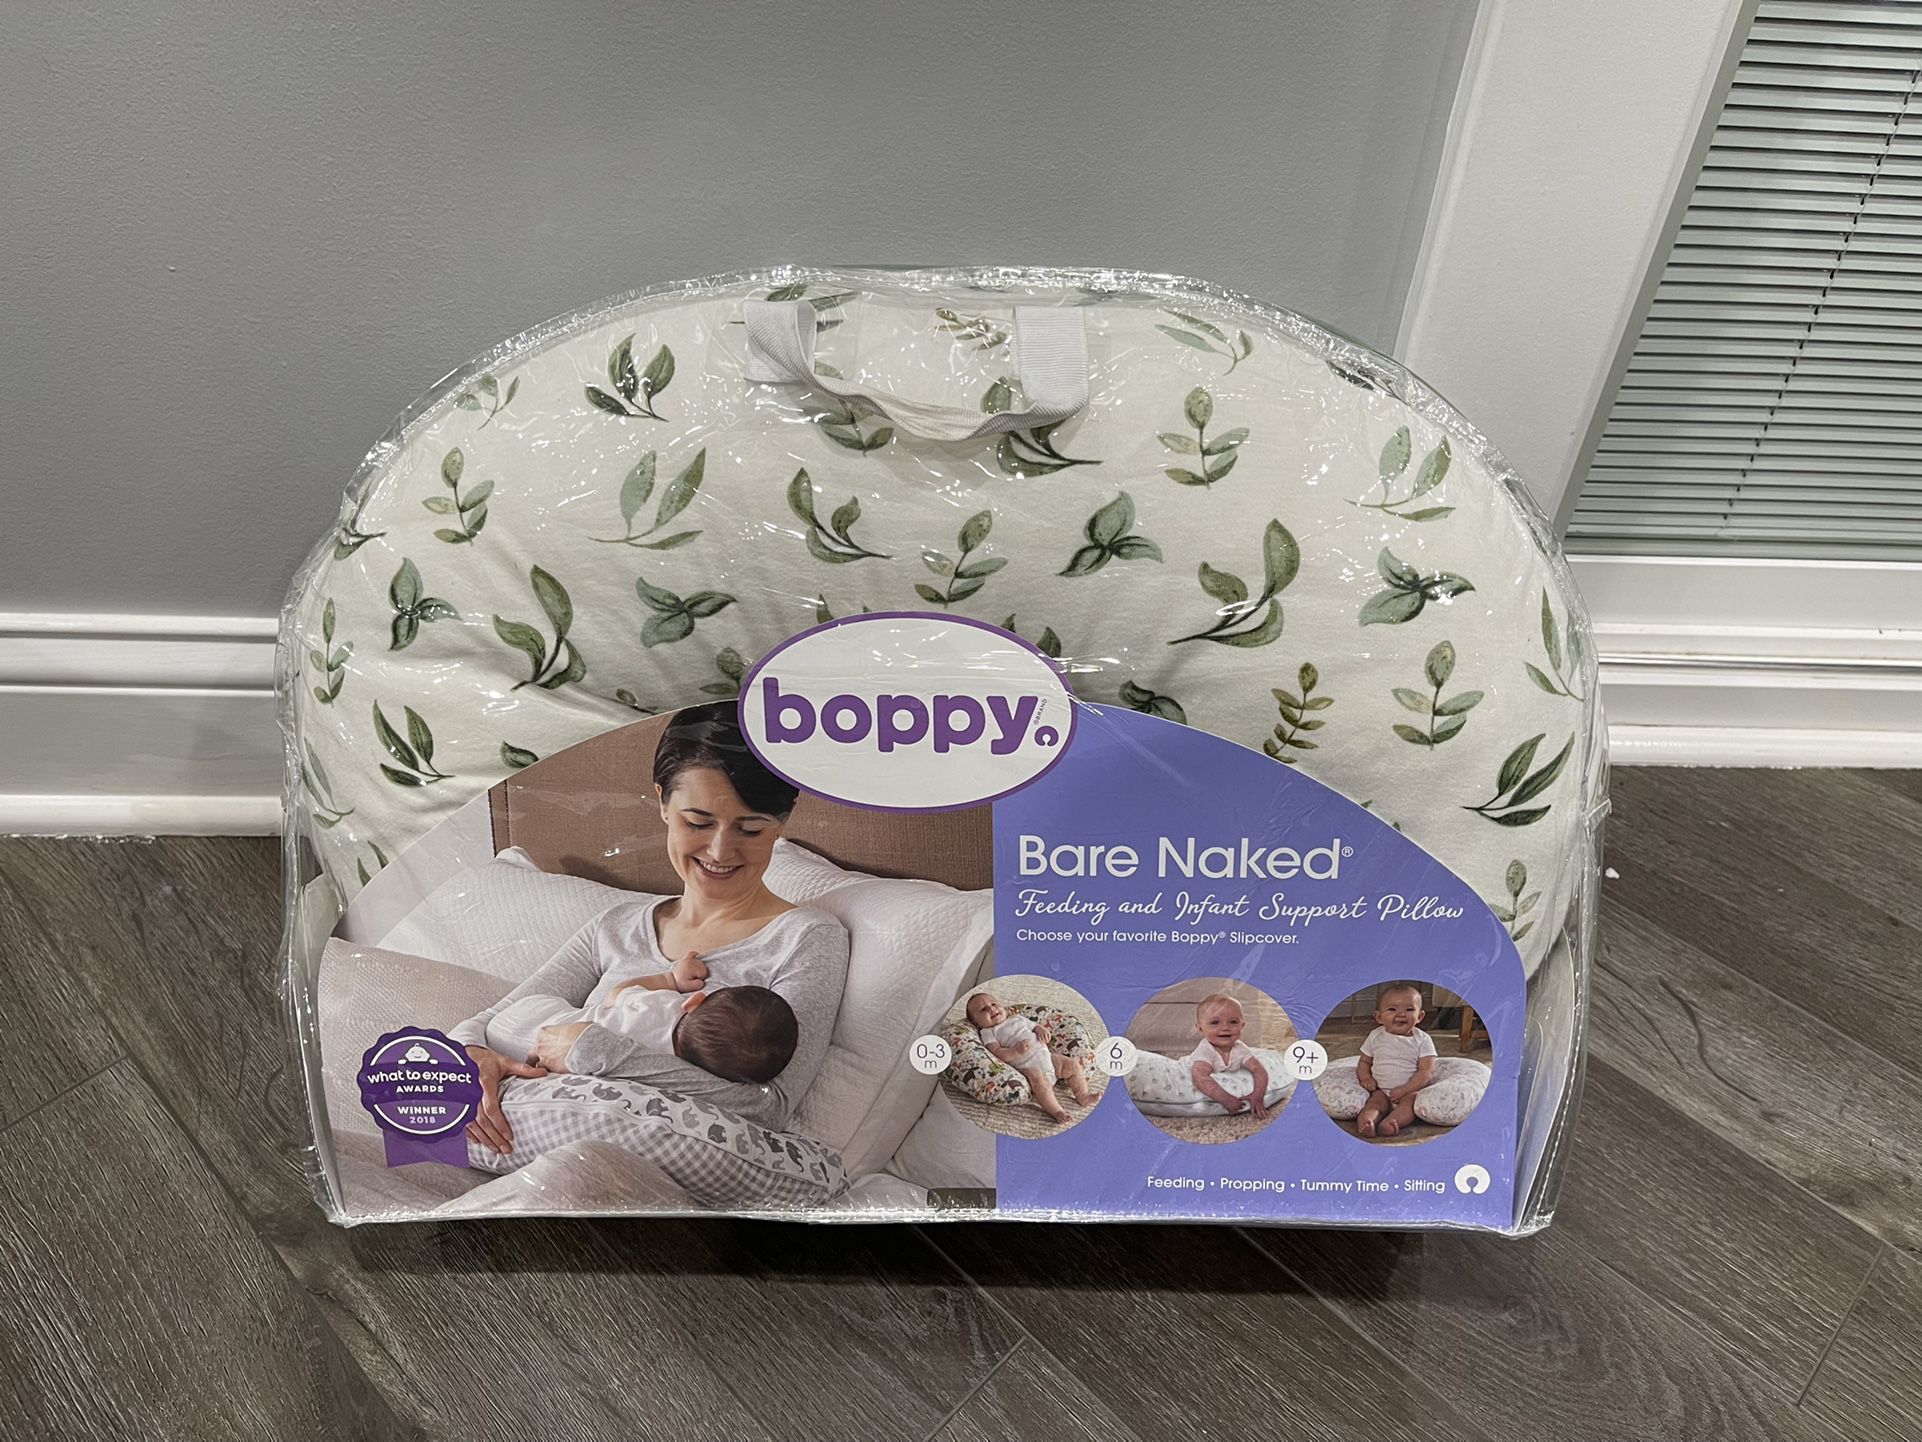 Boppy Pillow